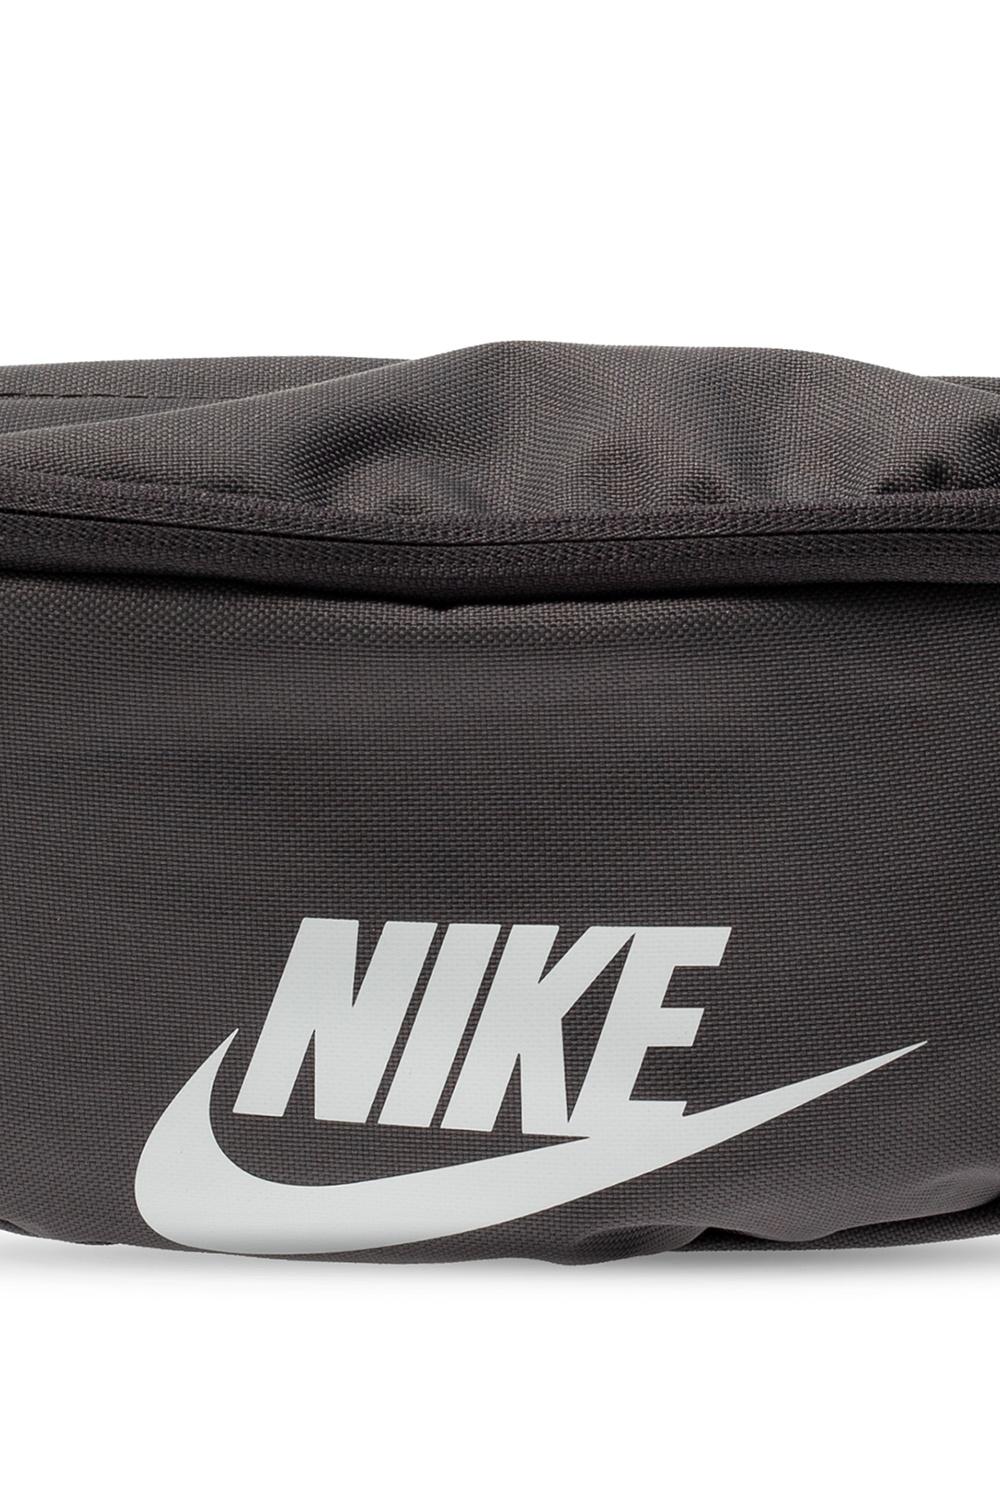 Nike Branded Belt Bag in Grey (Gray) - Lyst